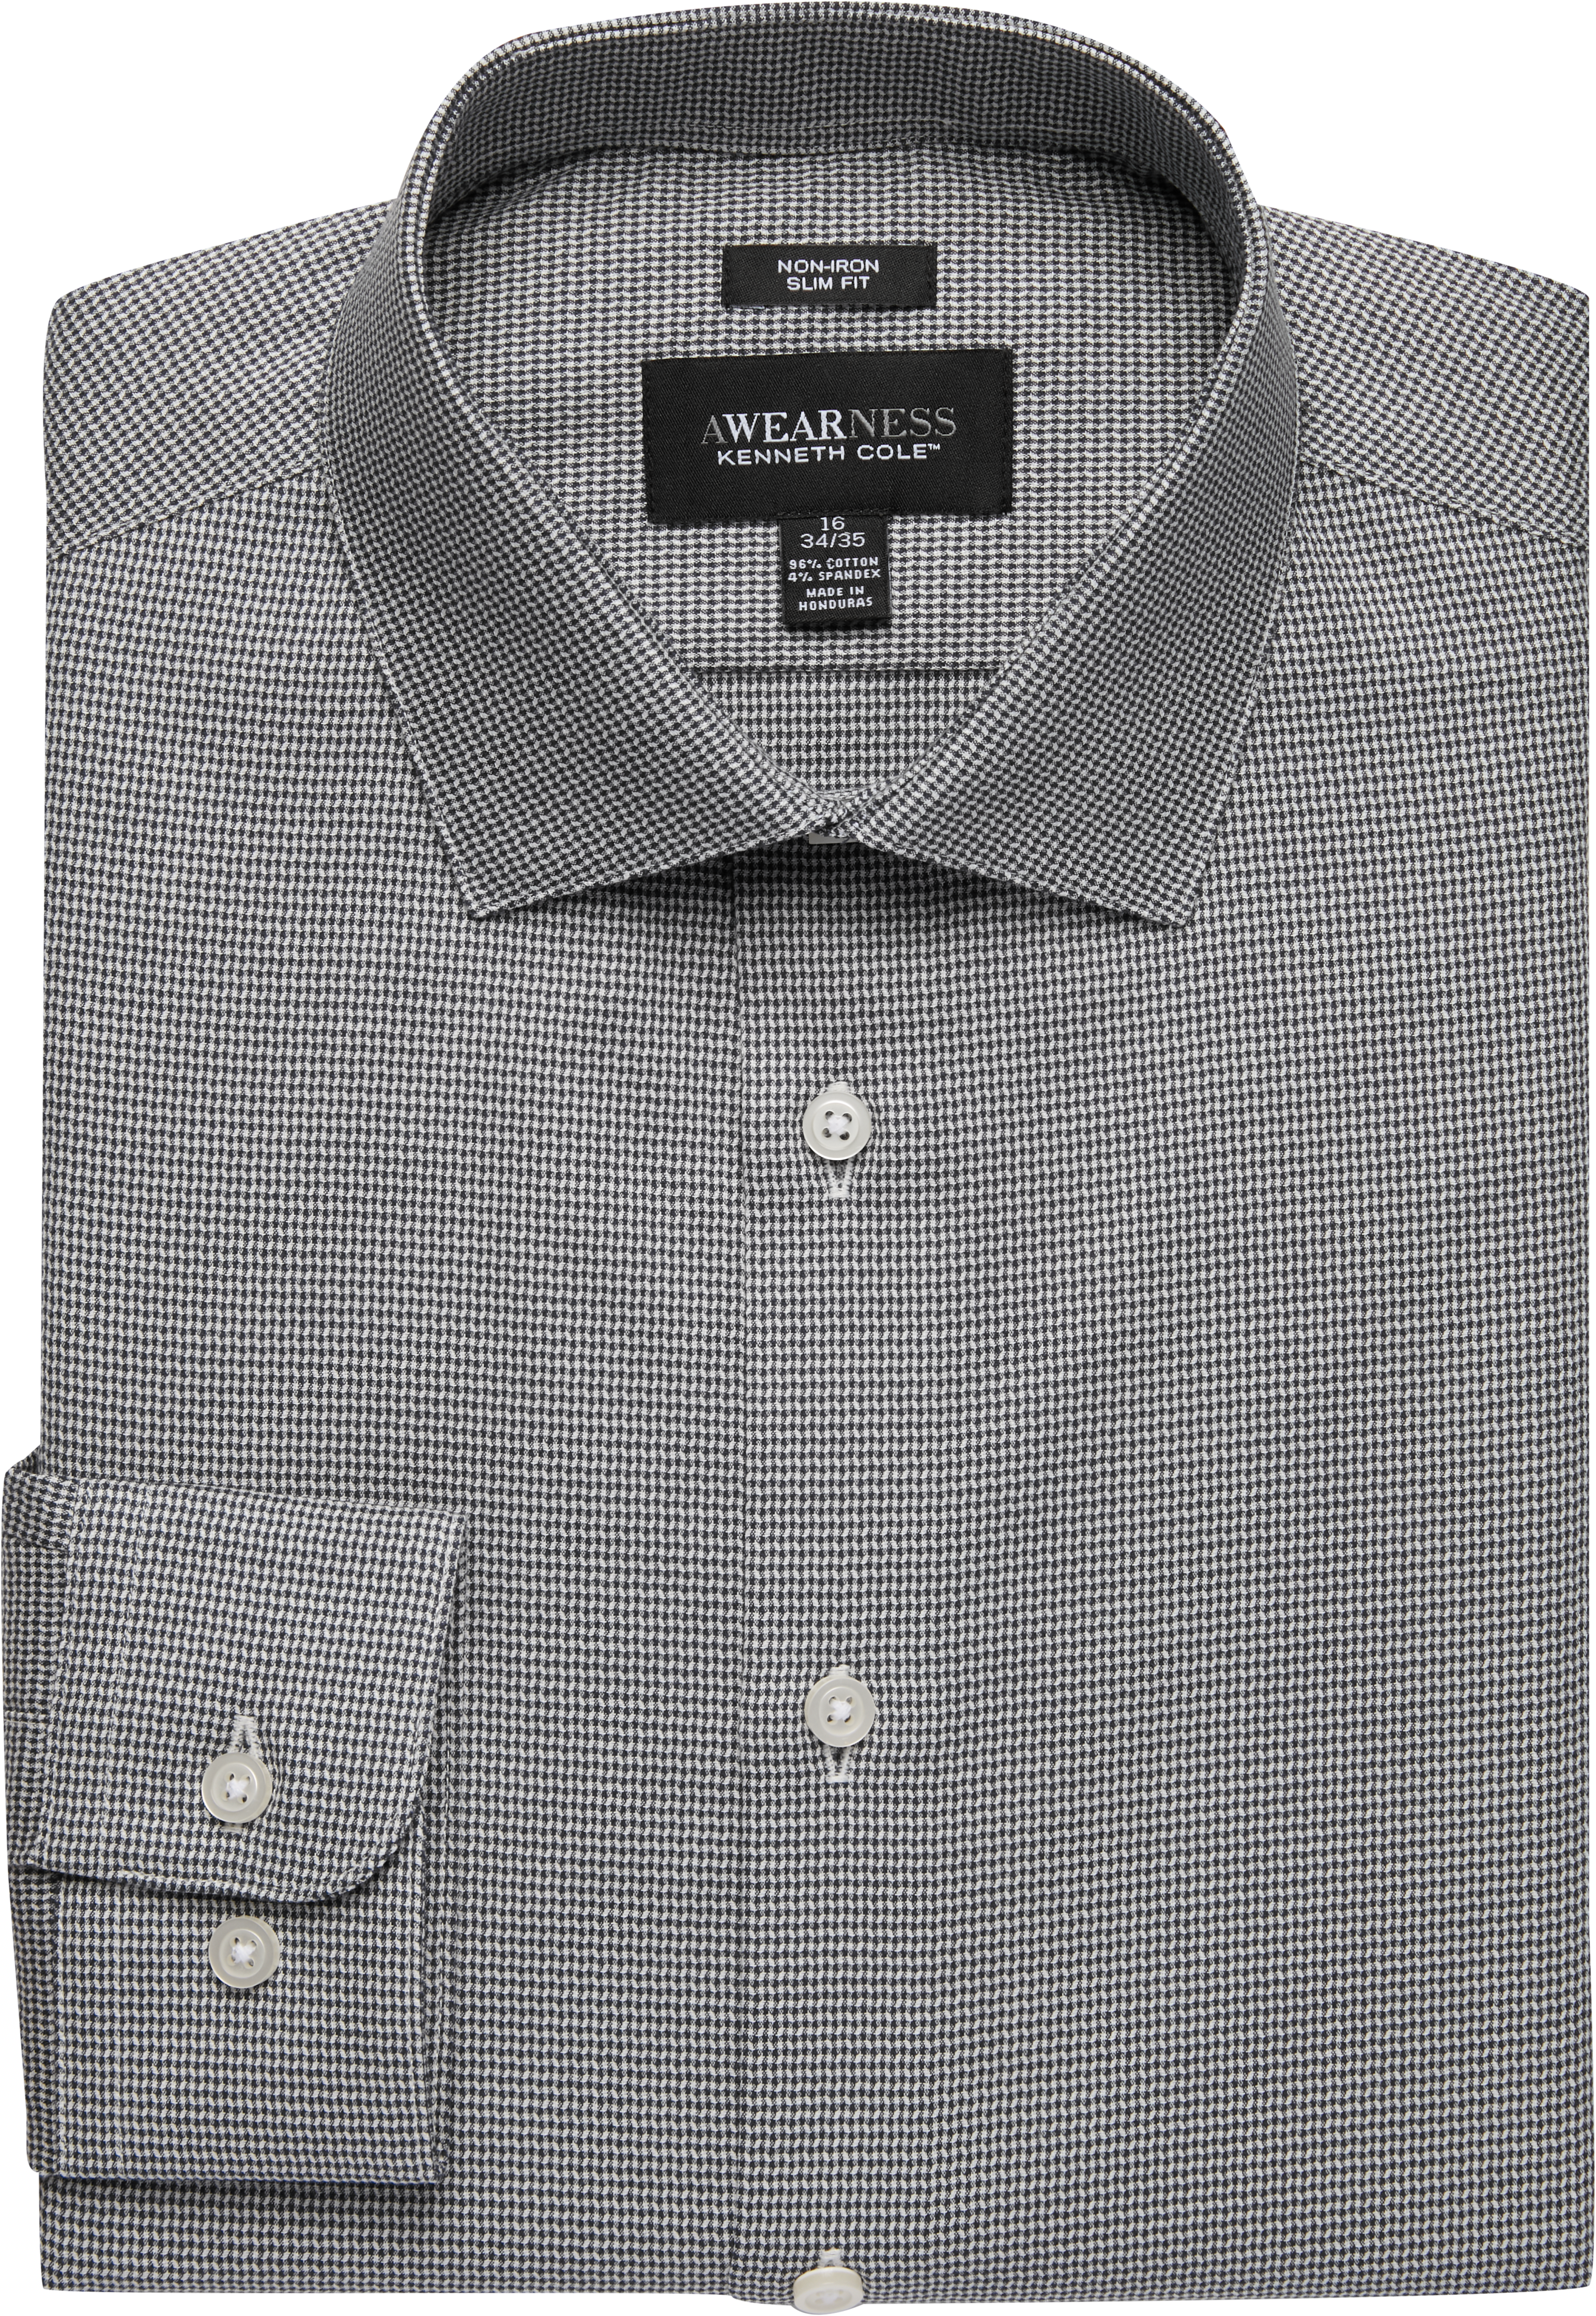 Awearness Kenneth Cole Blue Woven Slim Fit Dress Shirt - Men's Sale ...